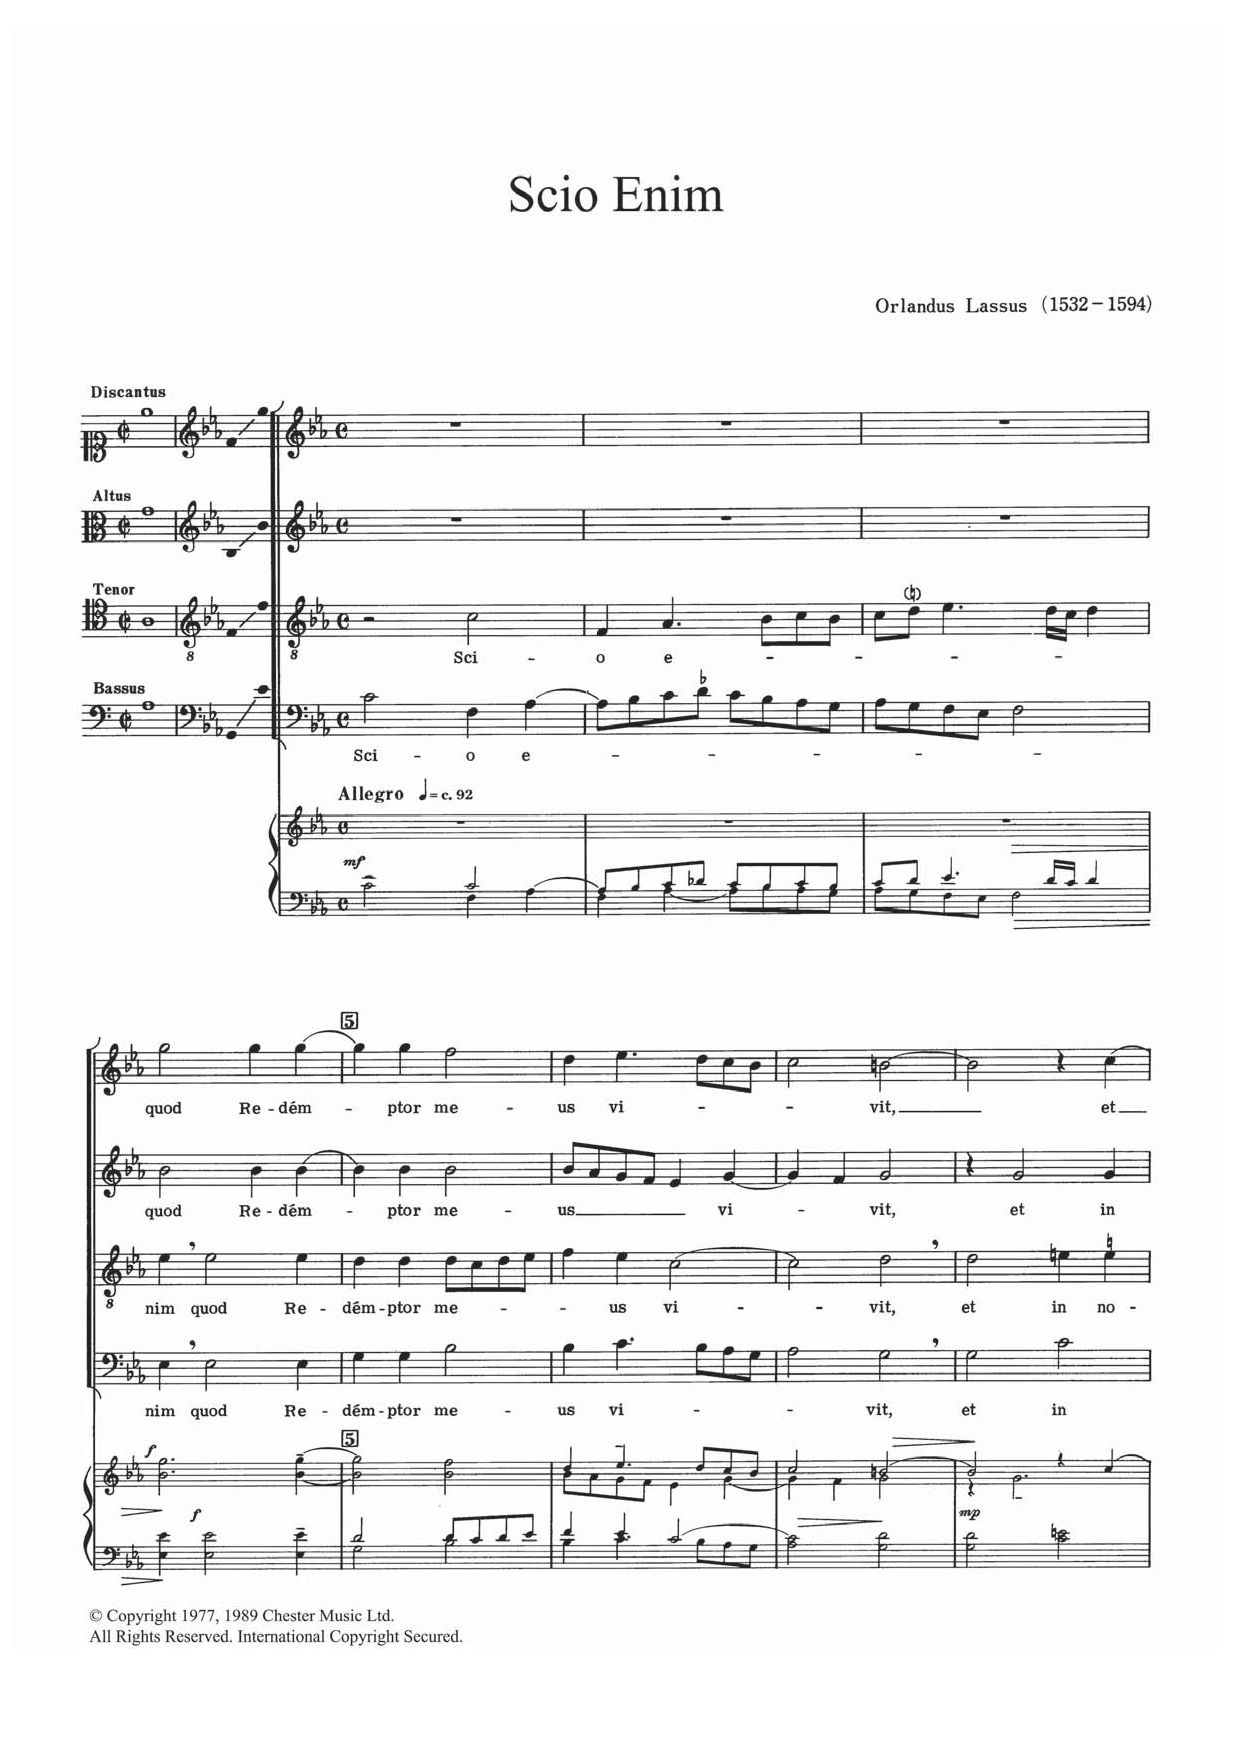 Orlandus Lassus Scio Enim Sheet Music Notes & Chords for SATB - Download or Print PDF